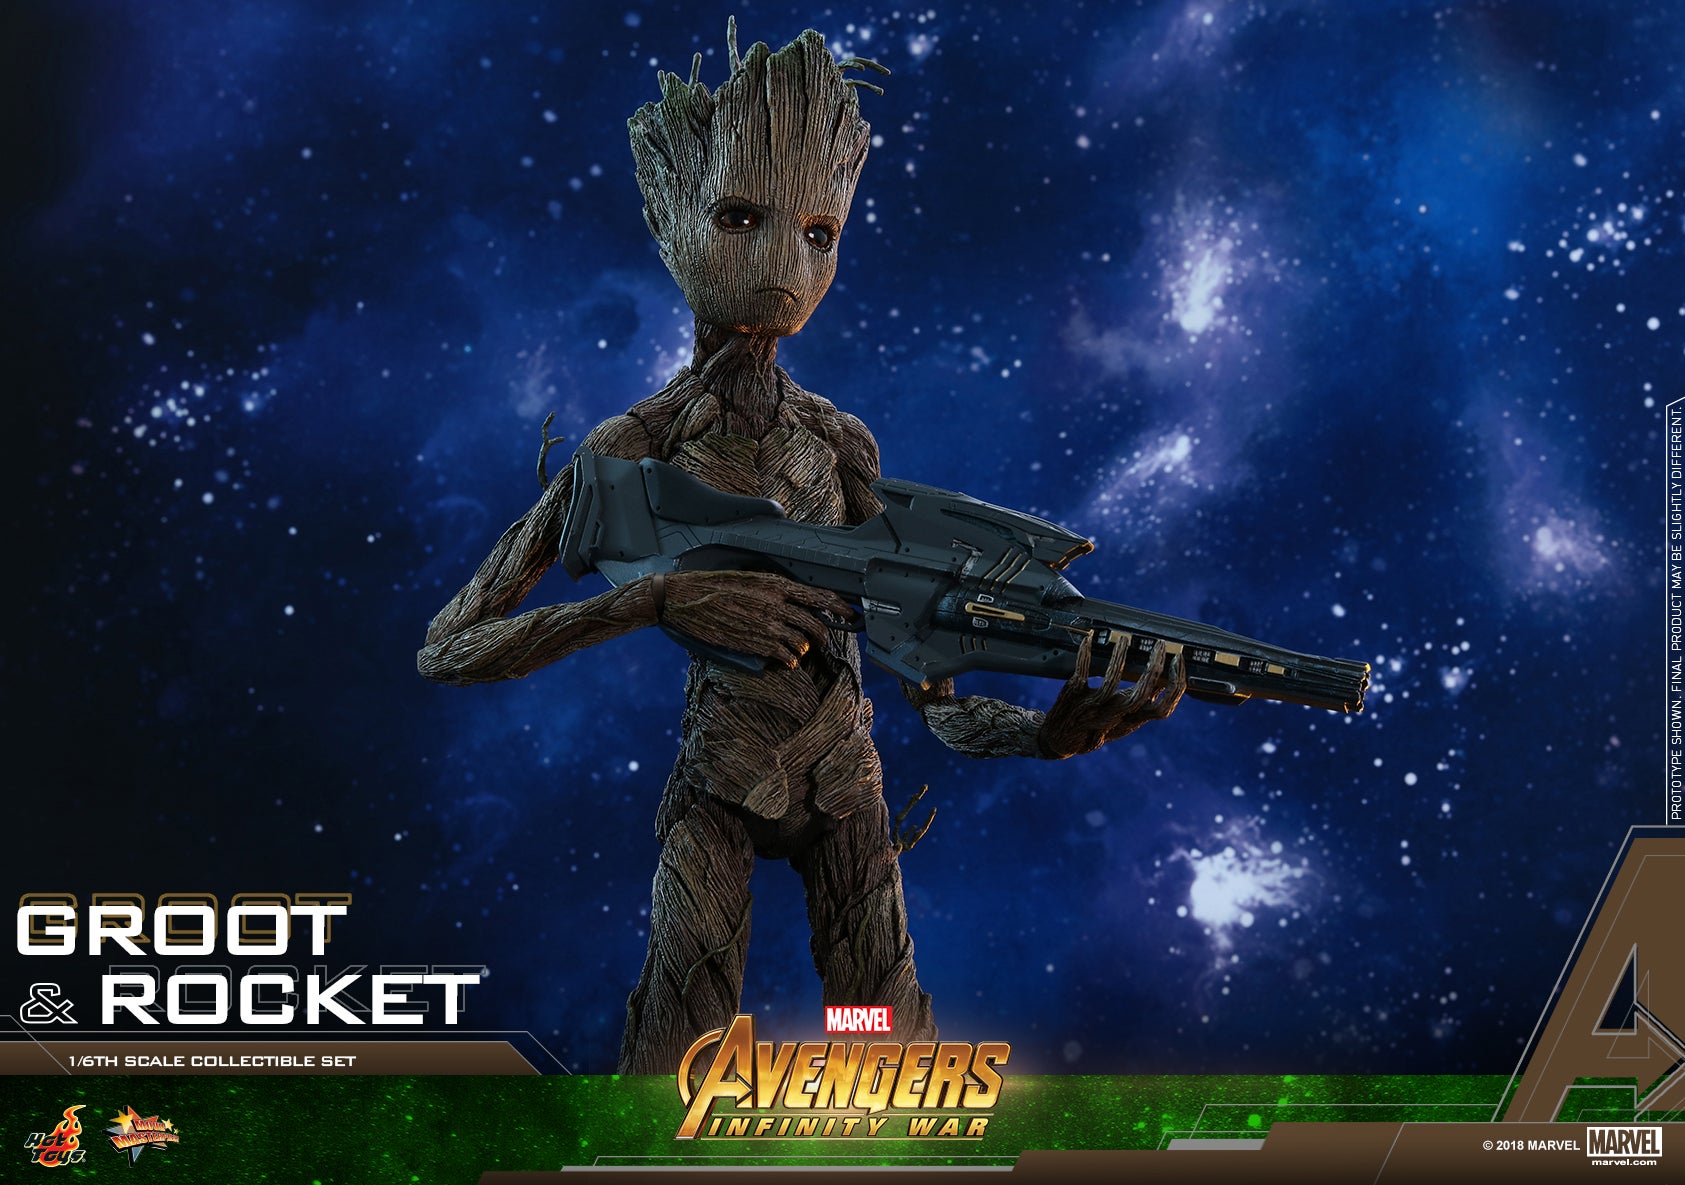 Hot Toys Marvel Avengers: Infinity War Groot & Rocket | Figures.com